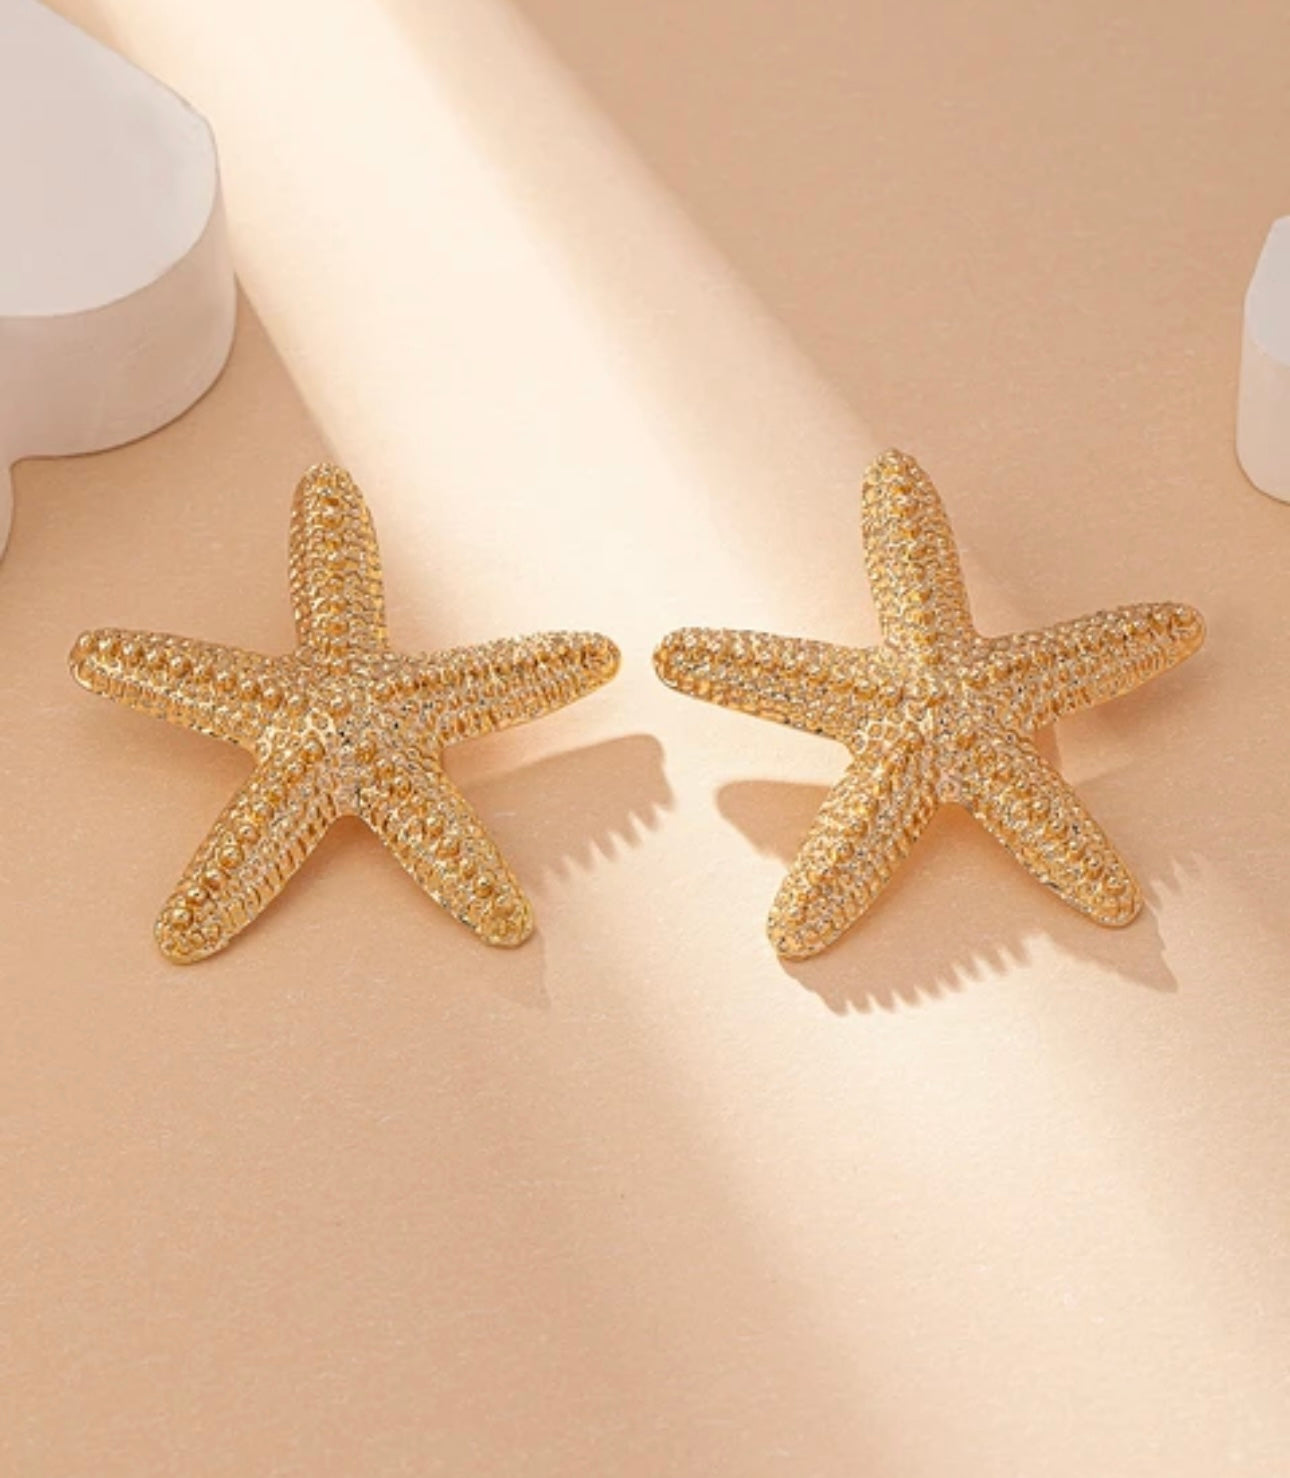 Star Fish Earrings - Patrice Designs